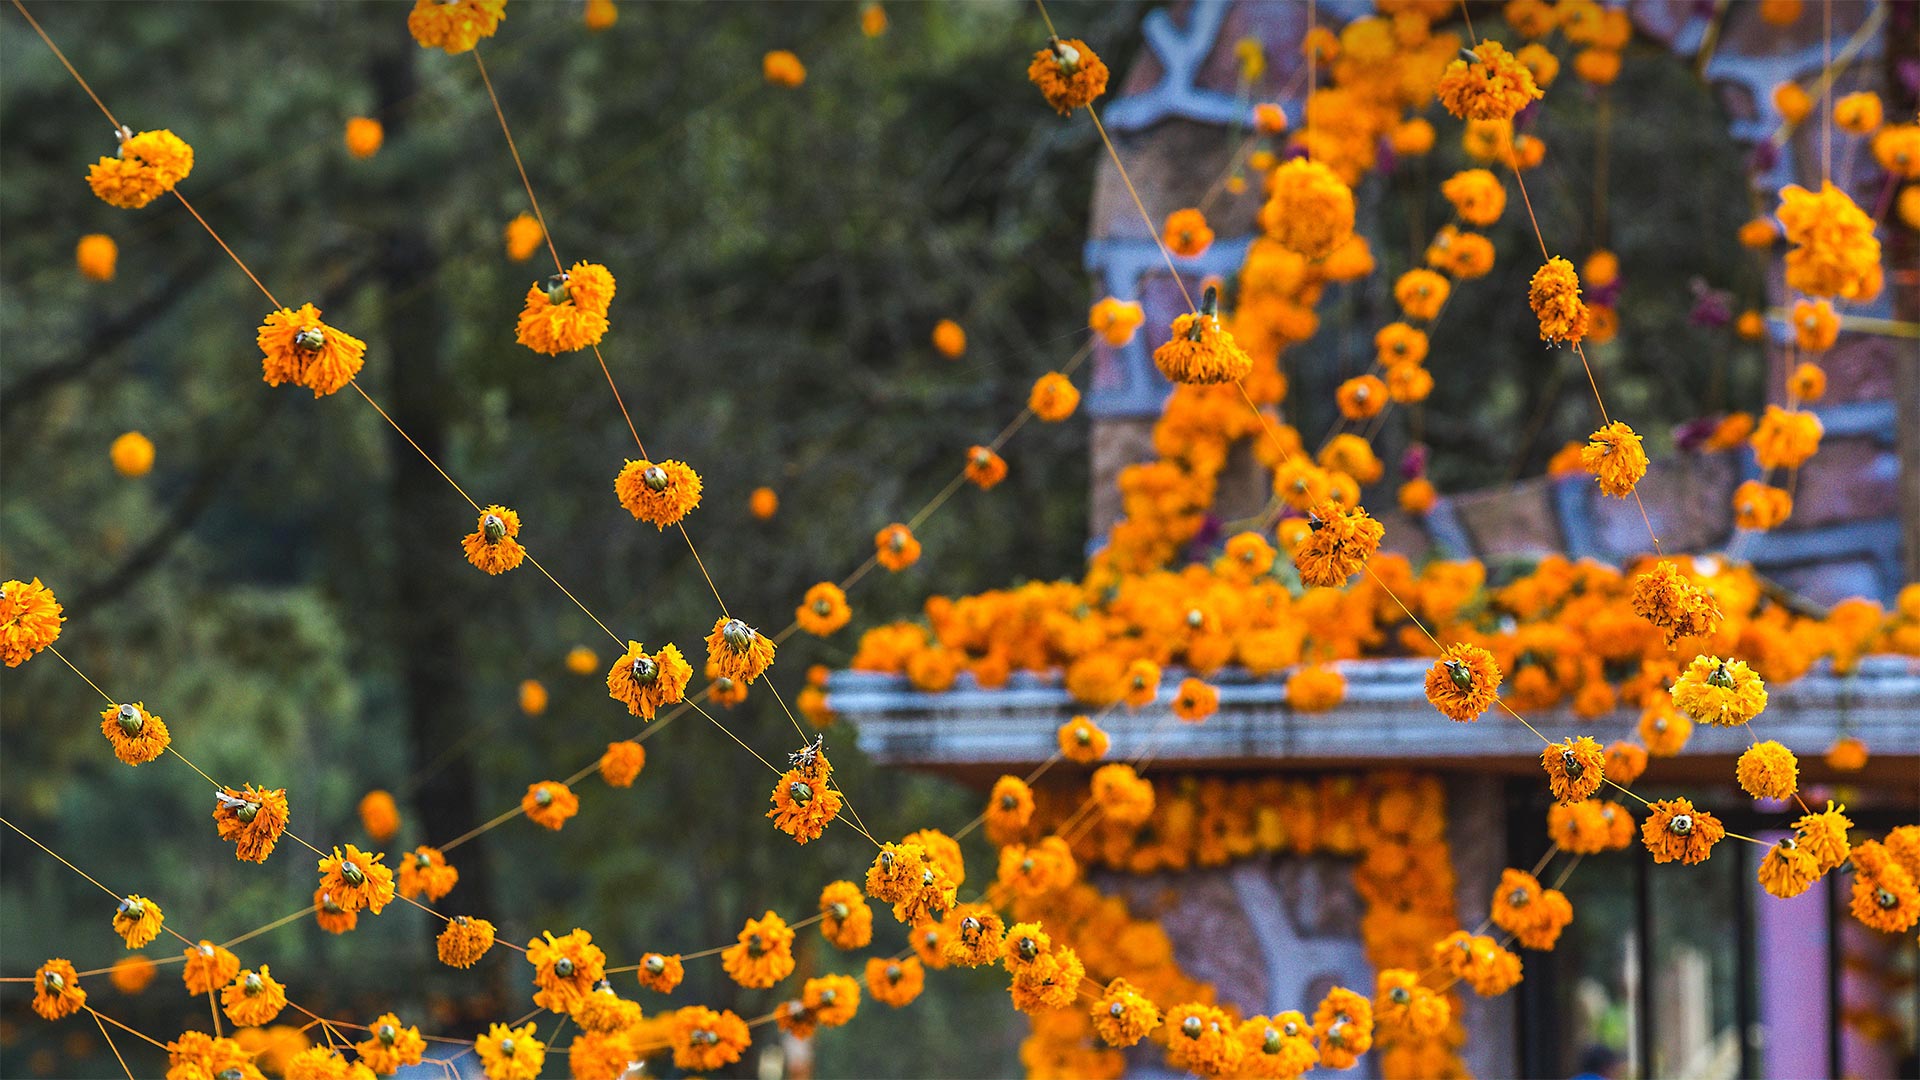 Marigolds decorate a cemetery in Patzcuaro, Michoacan, Mexico, for a Day of the Dead ceremony - Daniel Elizalde S/Shutterstock)